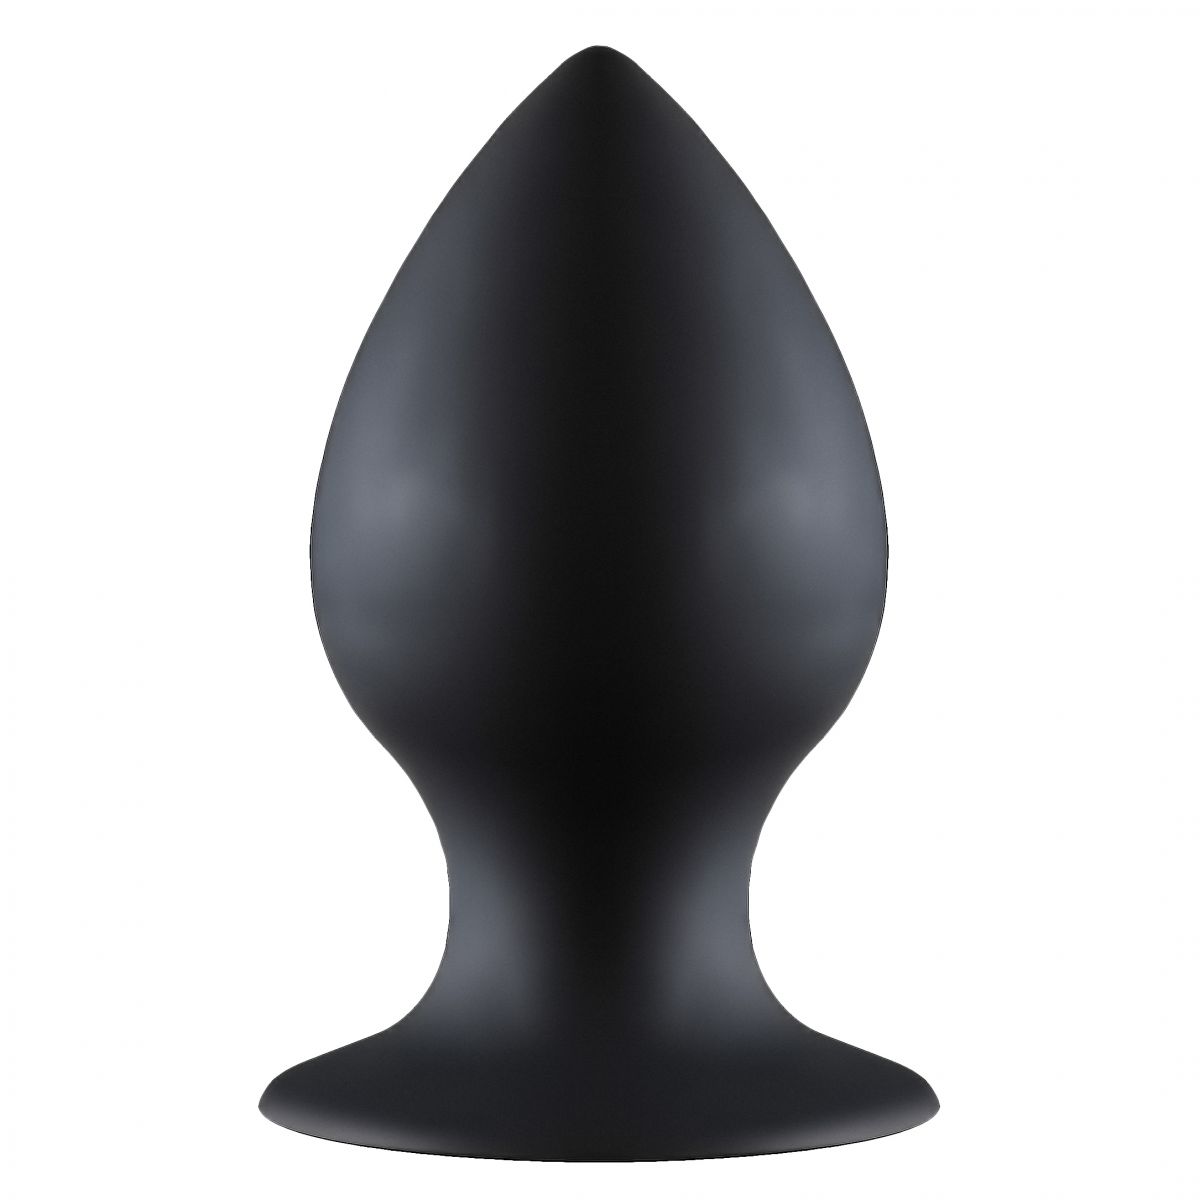 Чёрная анальная пробка Thick Anal Plug Medium - 9,5 см. от Lola toys